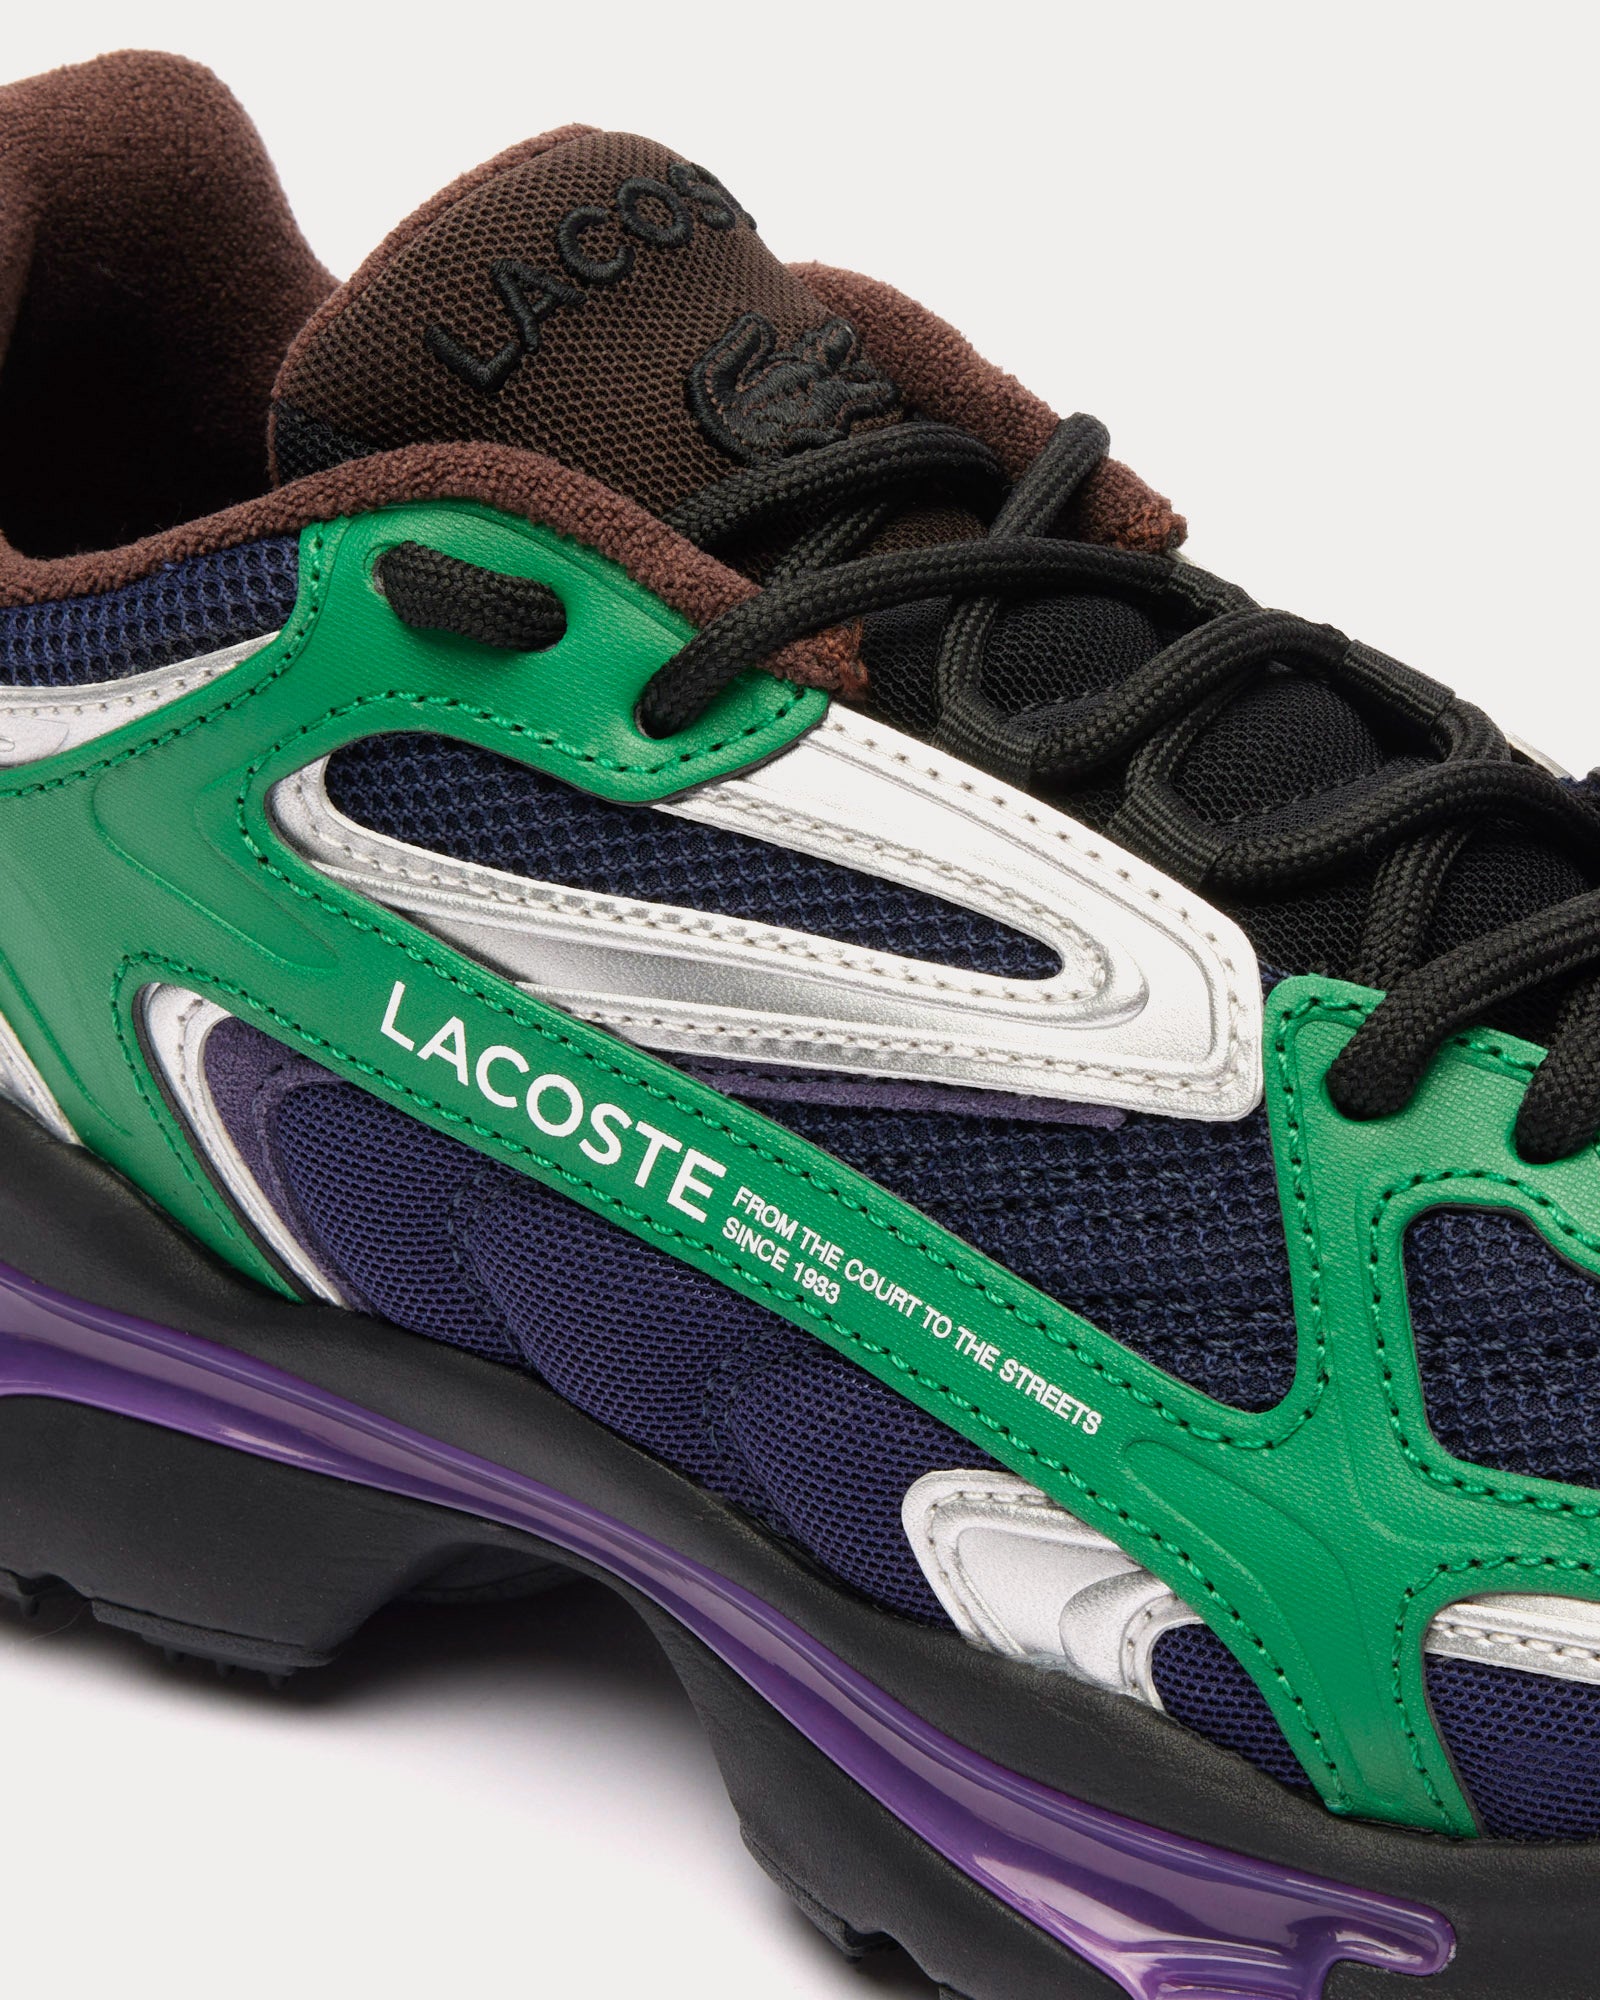 Lacoste - L003 2K24 Navy / Green Low Top Sneakers